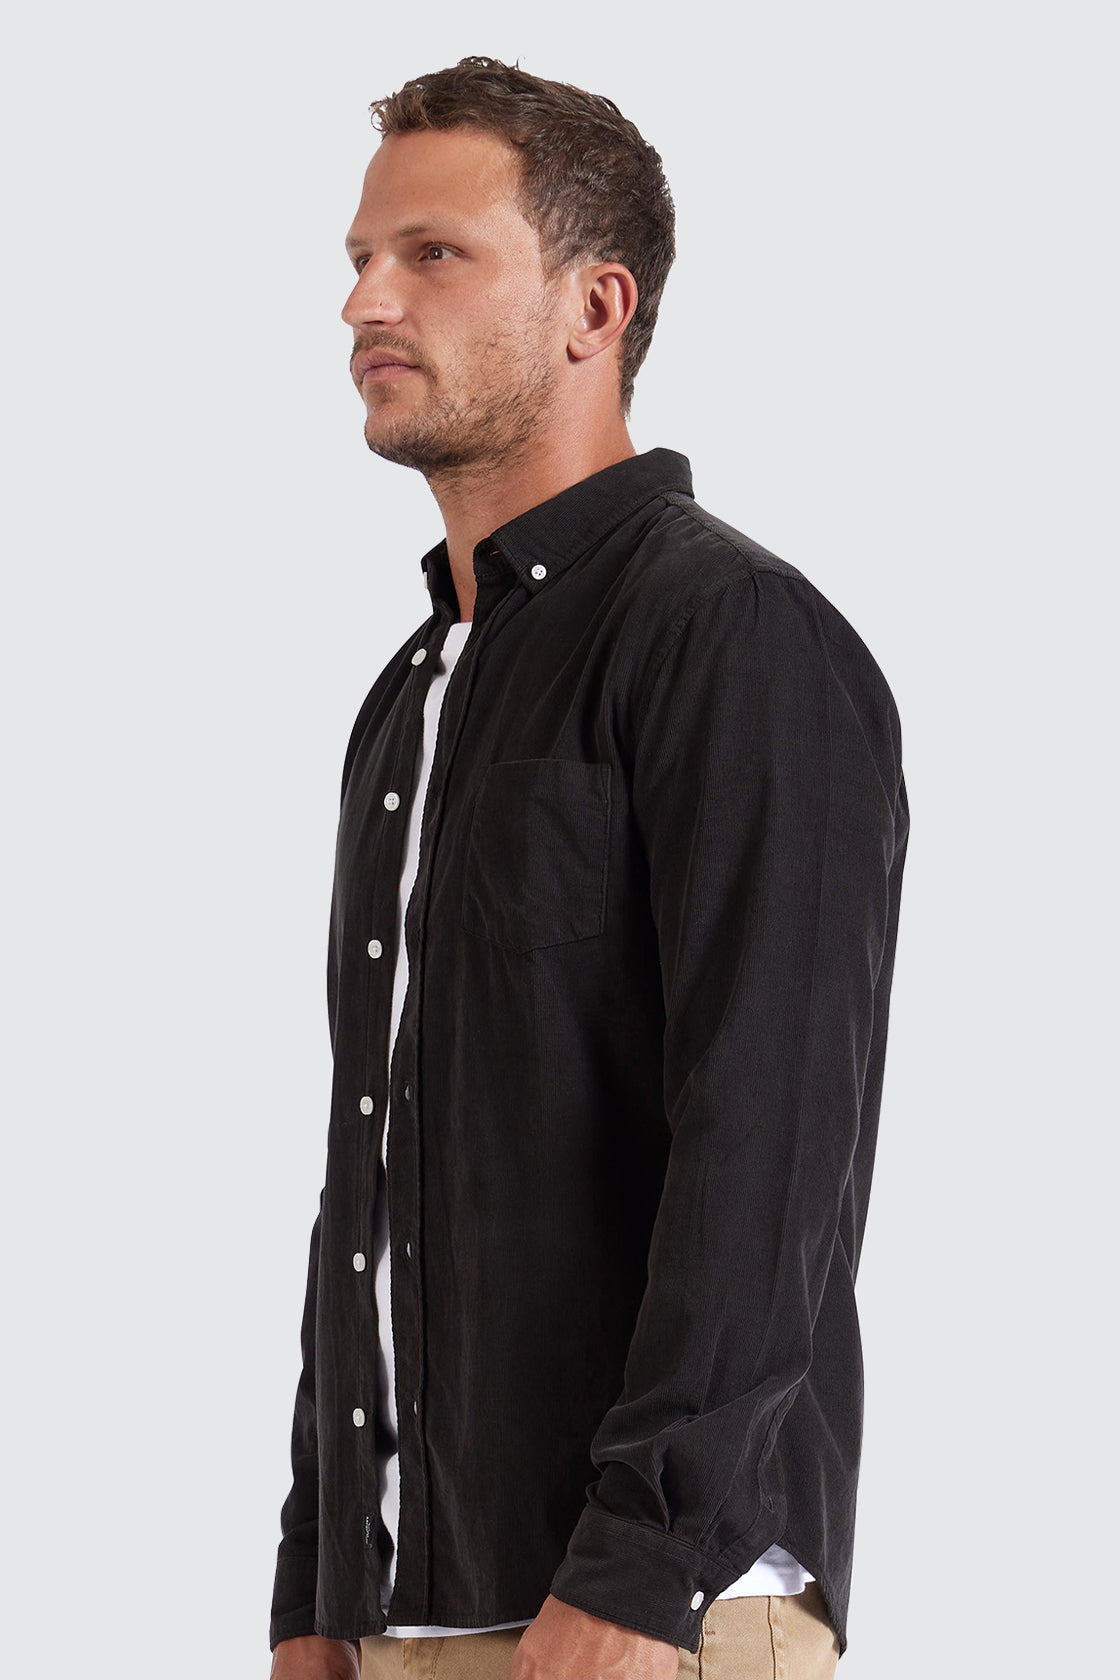 Academy Brand Jack Cord Shirt Black